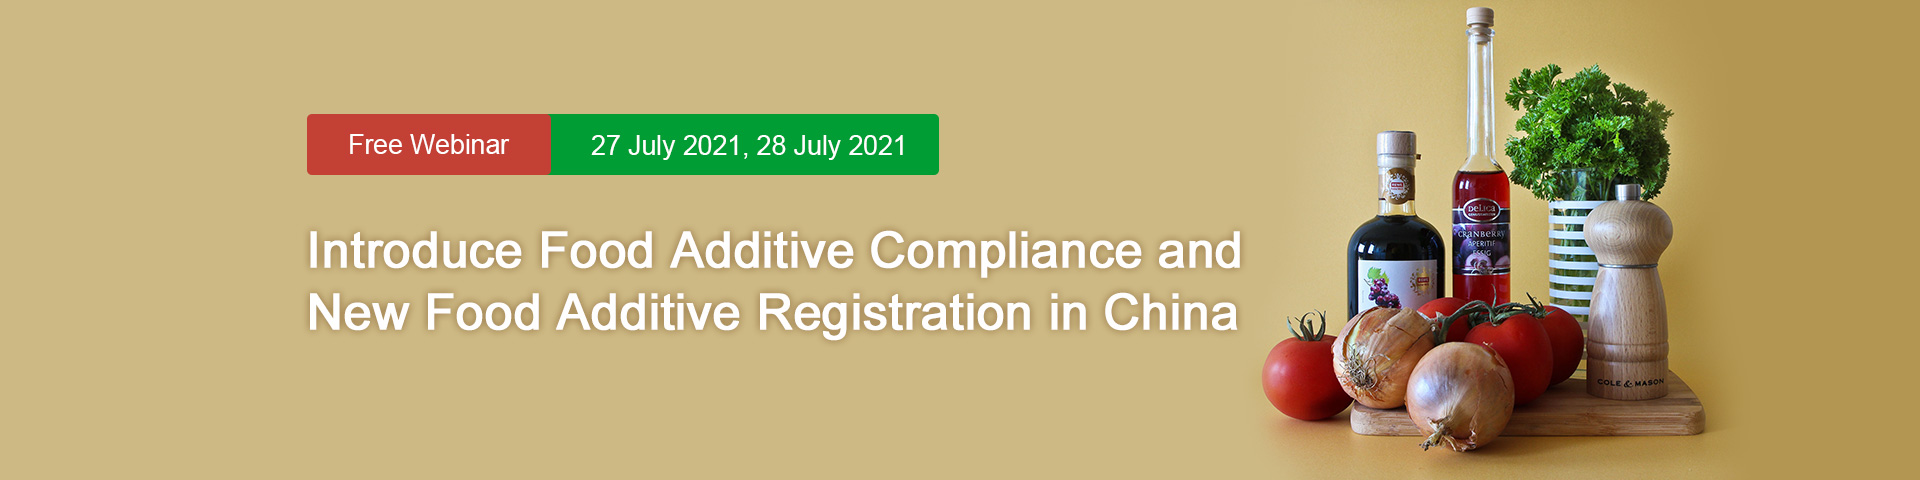 China,Food,Webinar,Free,Additive,Compliance,Registration